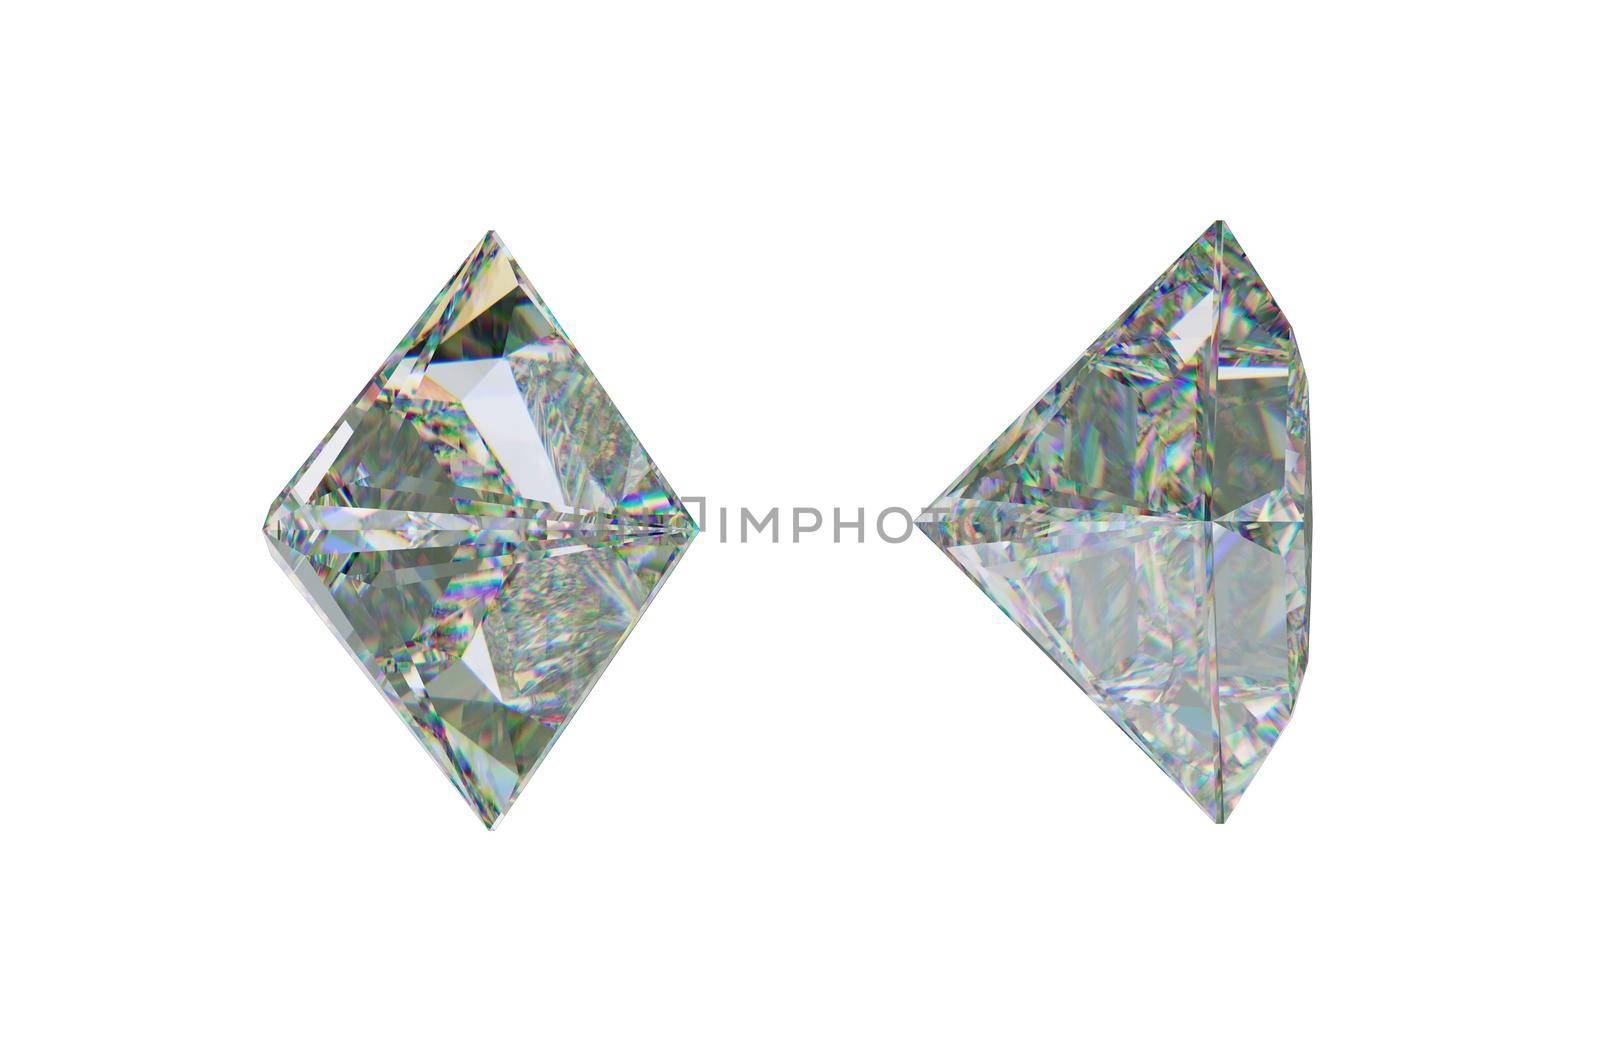 Sde views of princess cut diamond or gemstone on white. 3d rendering, 3d illustration
